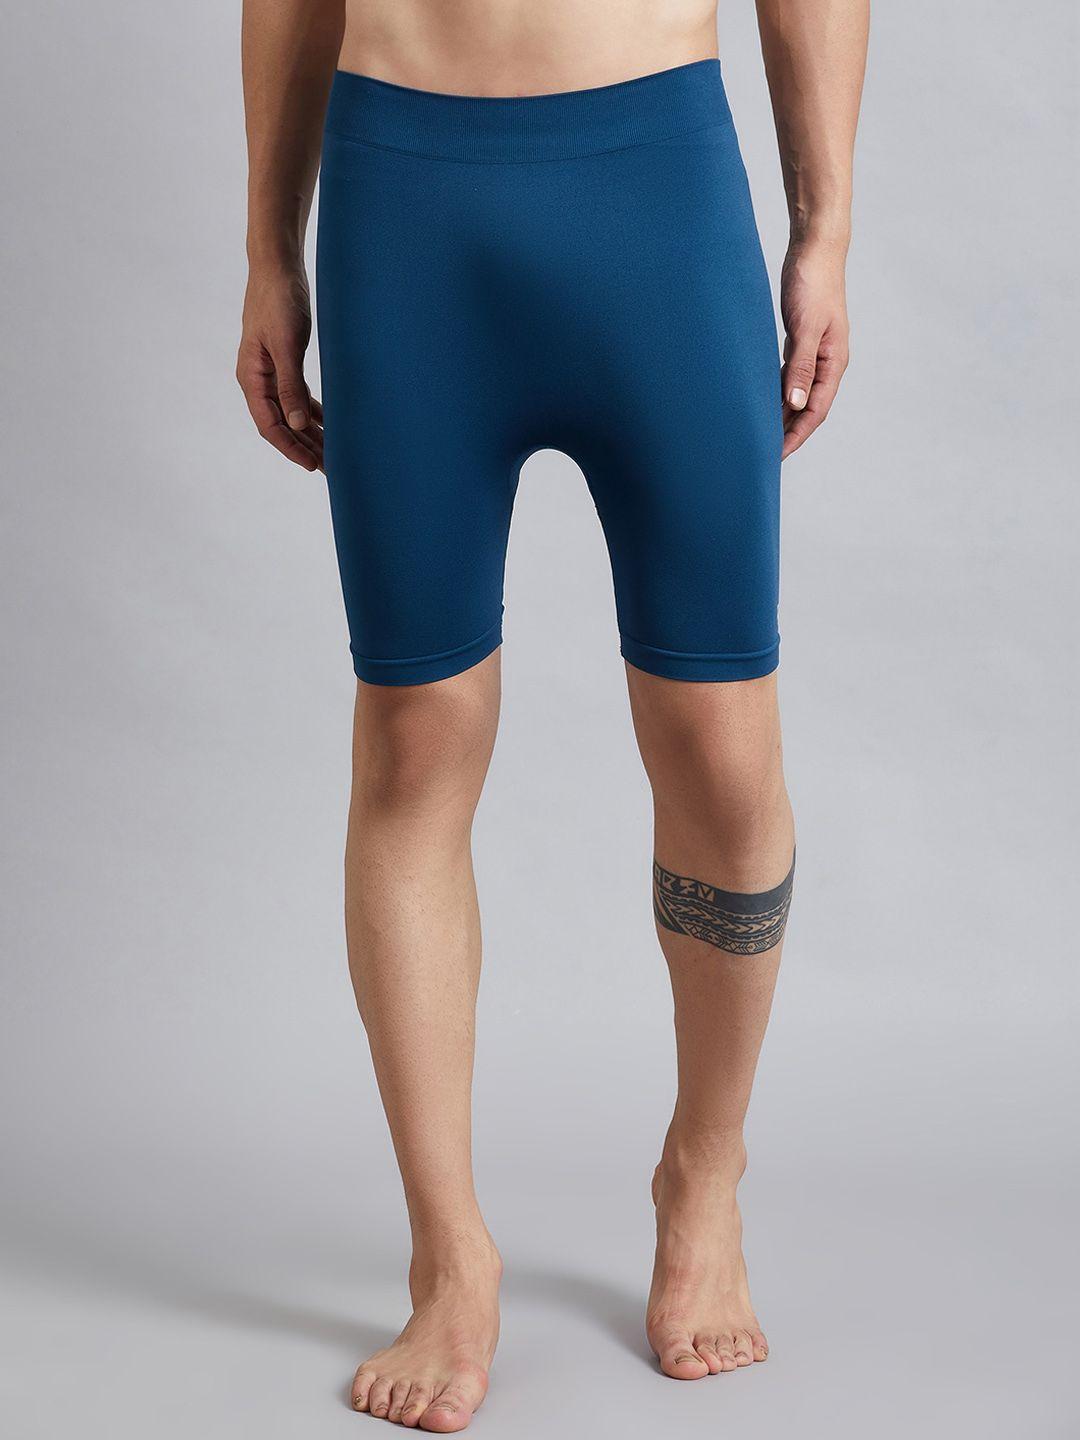 c9 airwear men low rise cycling shorts